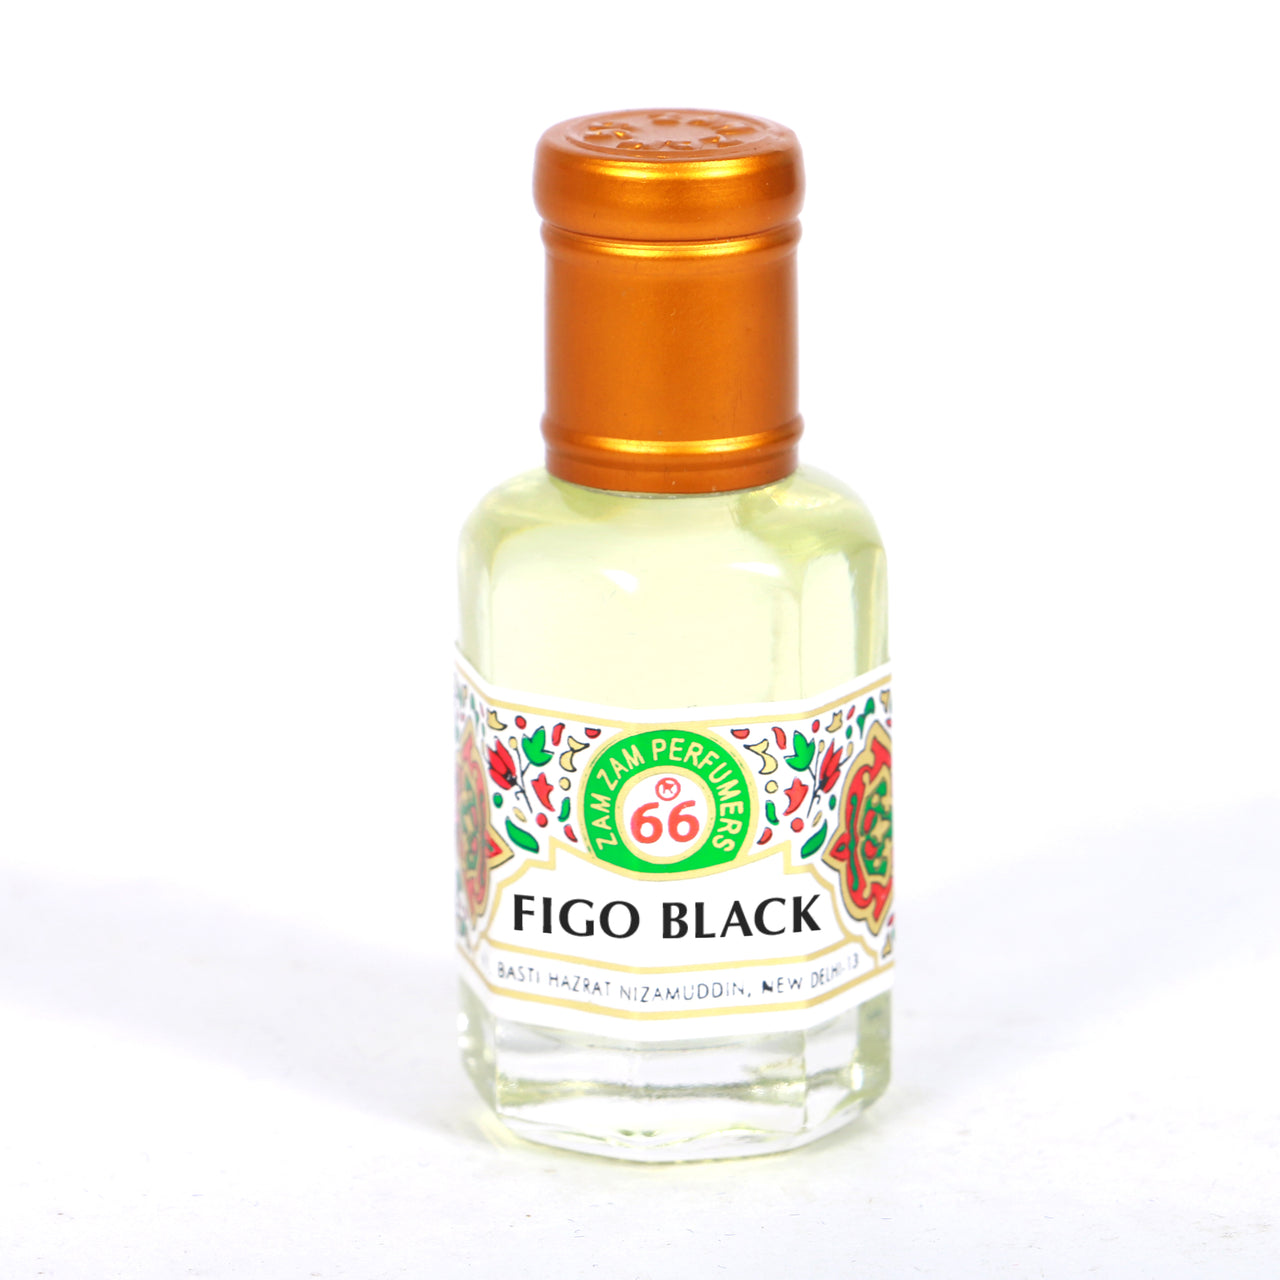 Figo Black Attar Perfume